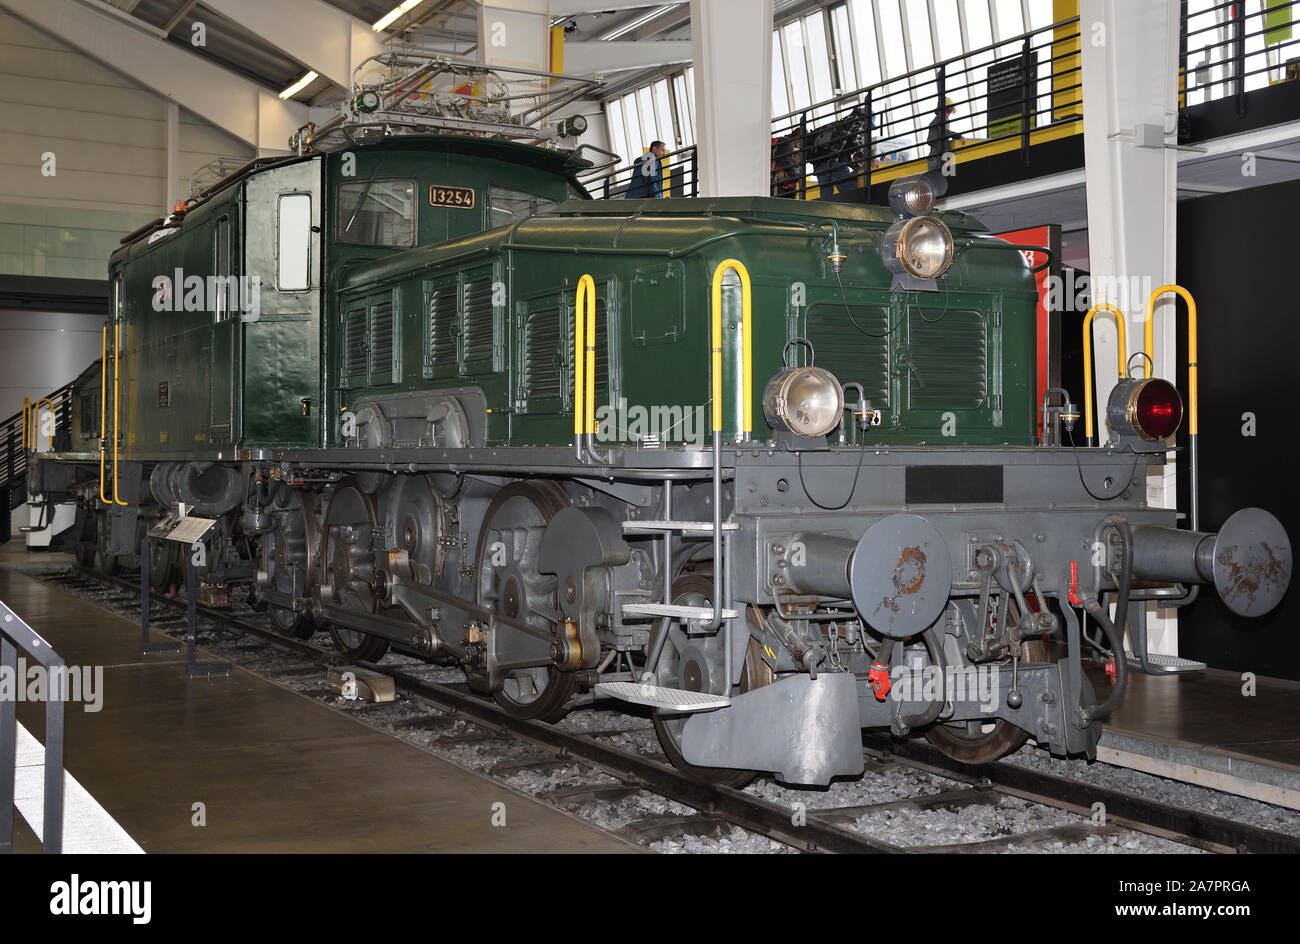 electric locomotive;no.13254;swiss museum of transport;lucerne;switzerland Stock Photo